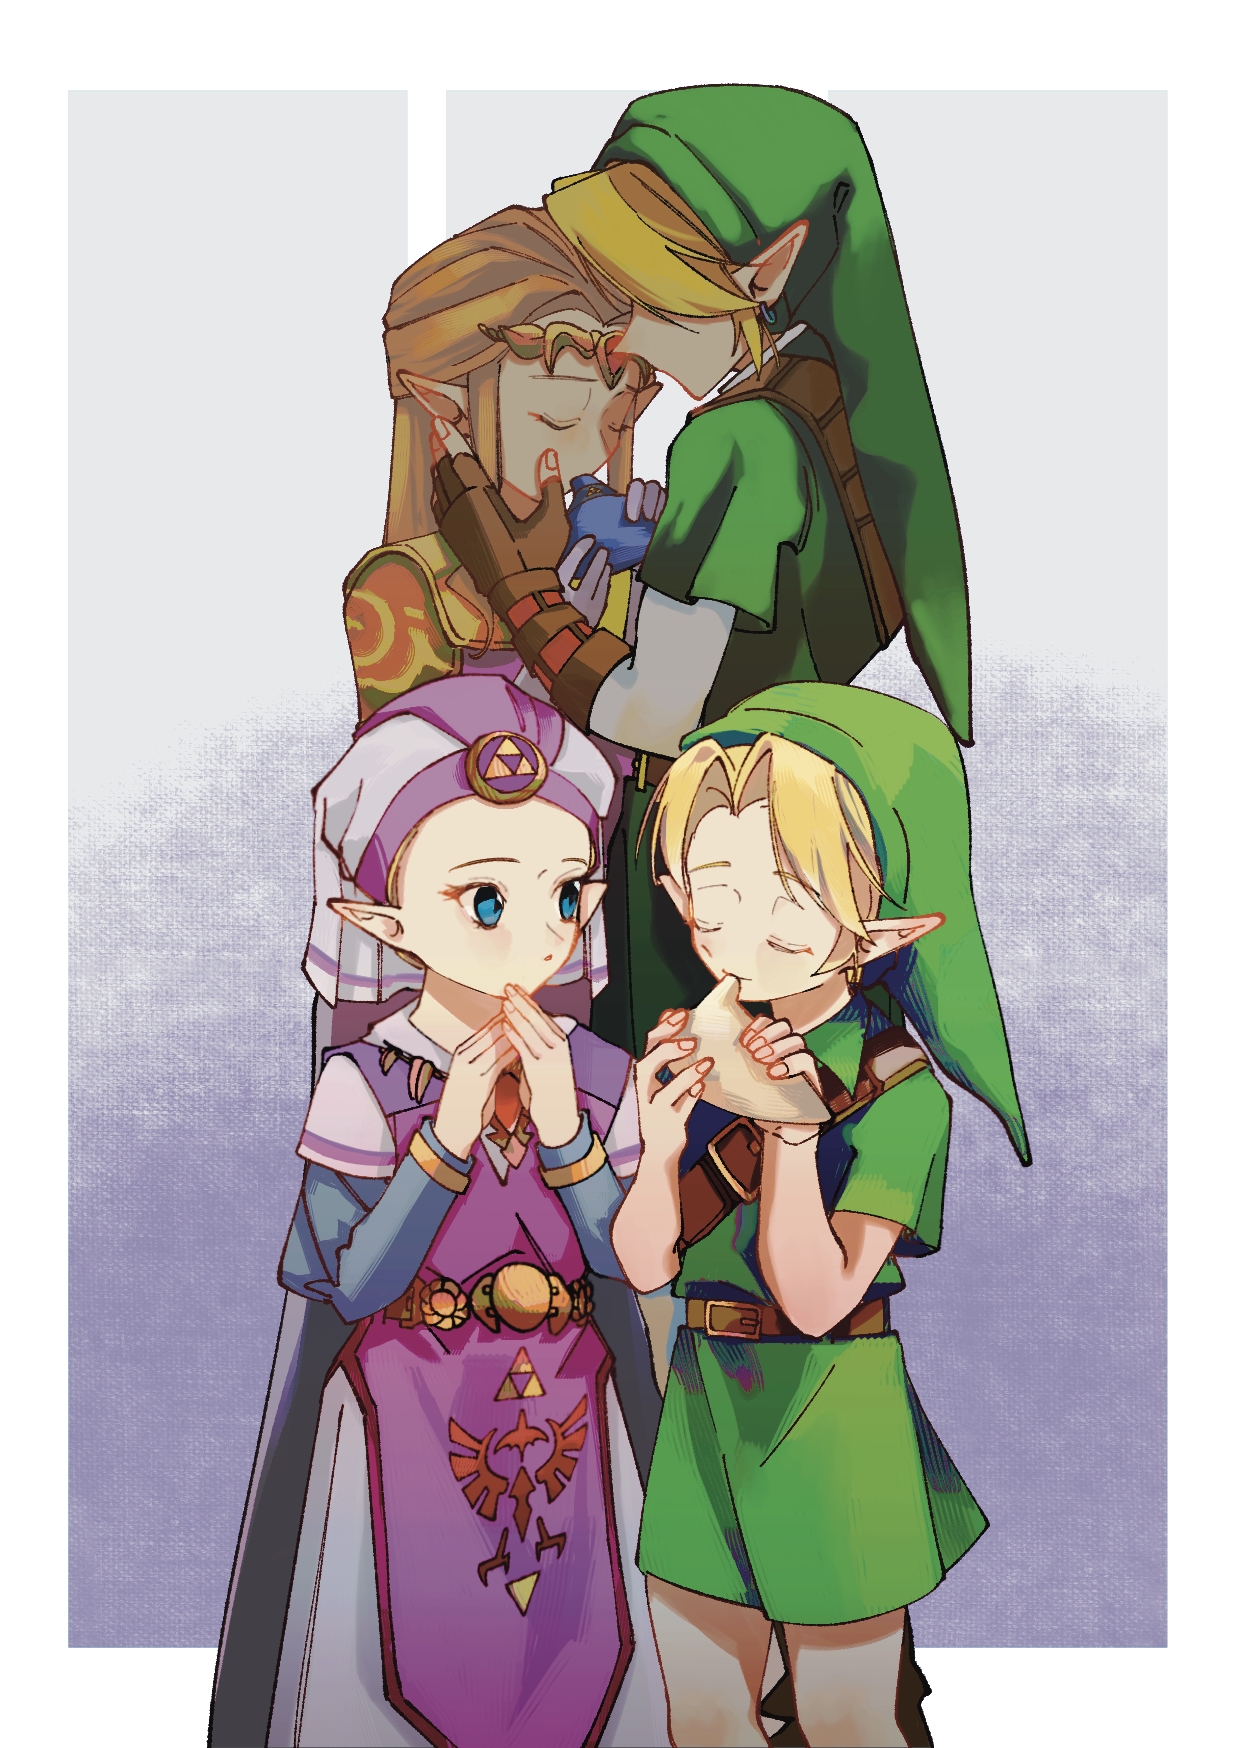 Young LInk - Zelda Ocarina of Time